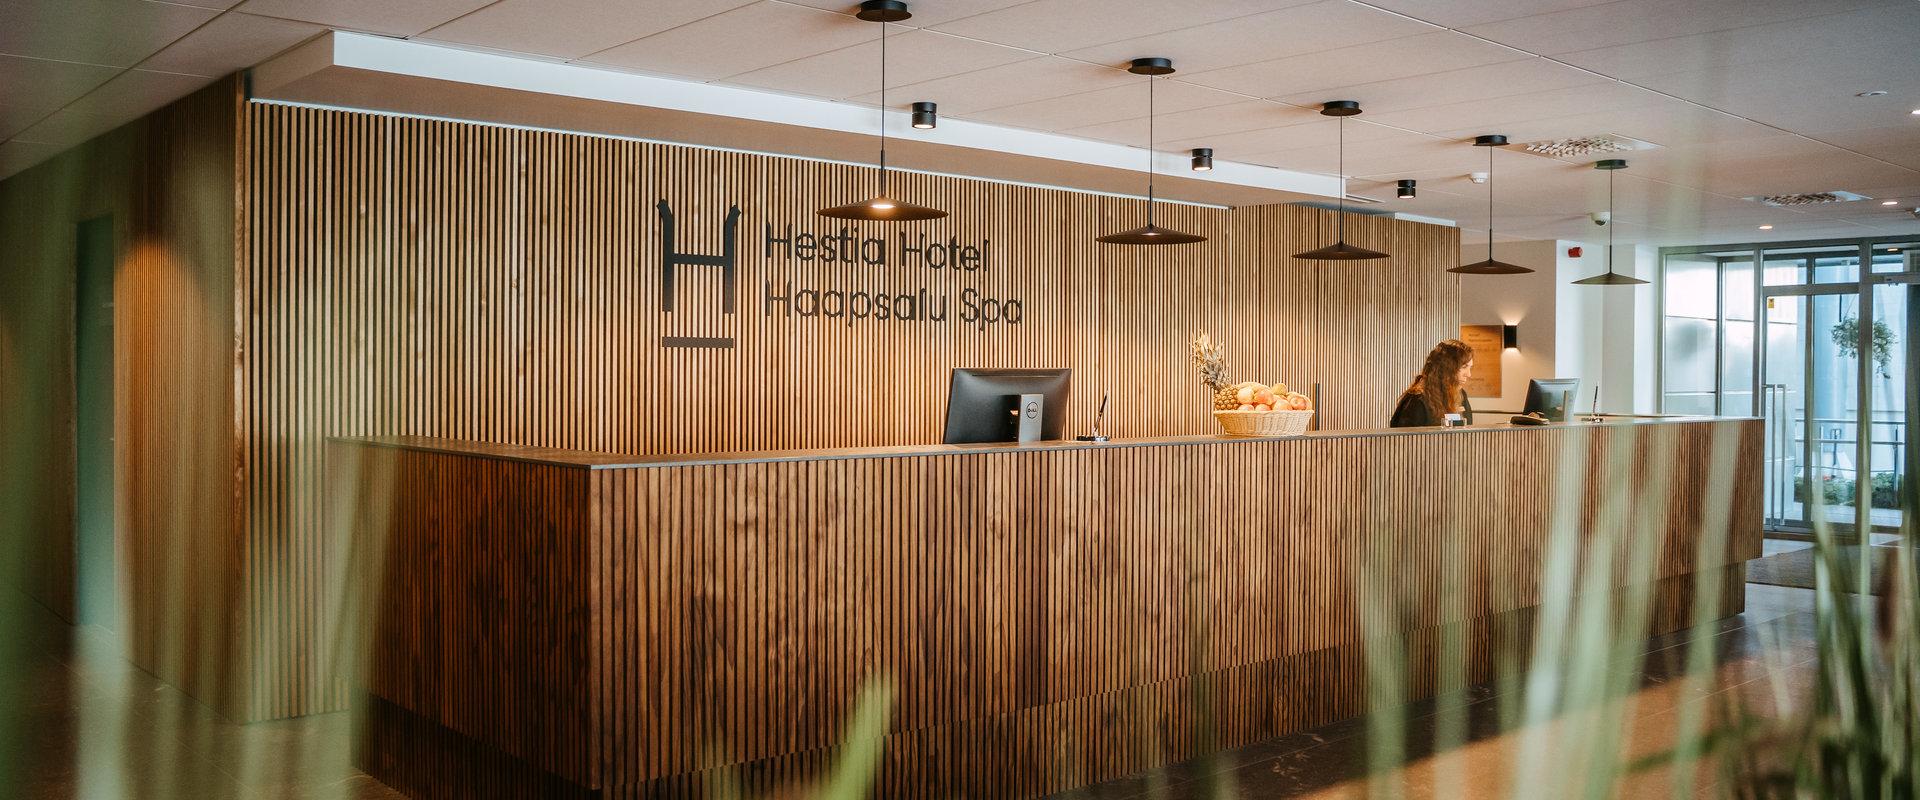 Hestia Hotel Haapsalu Spa HEAOLUSPAA